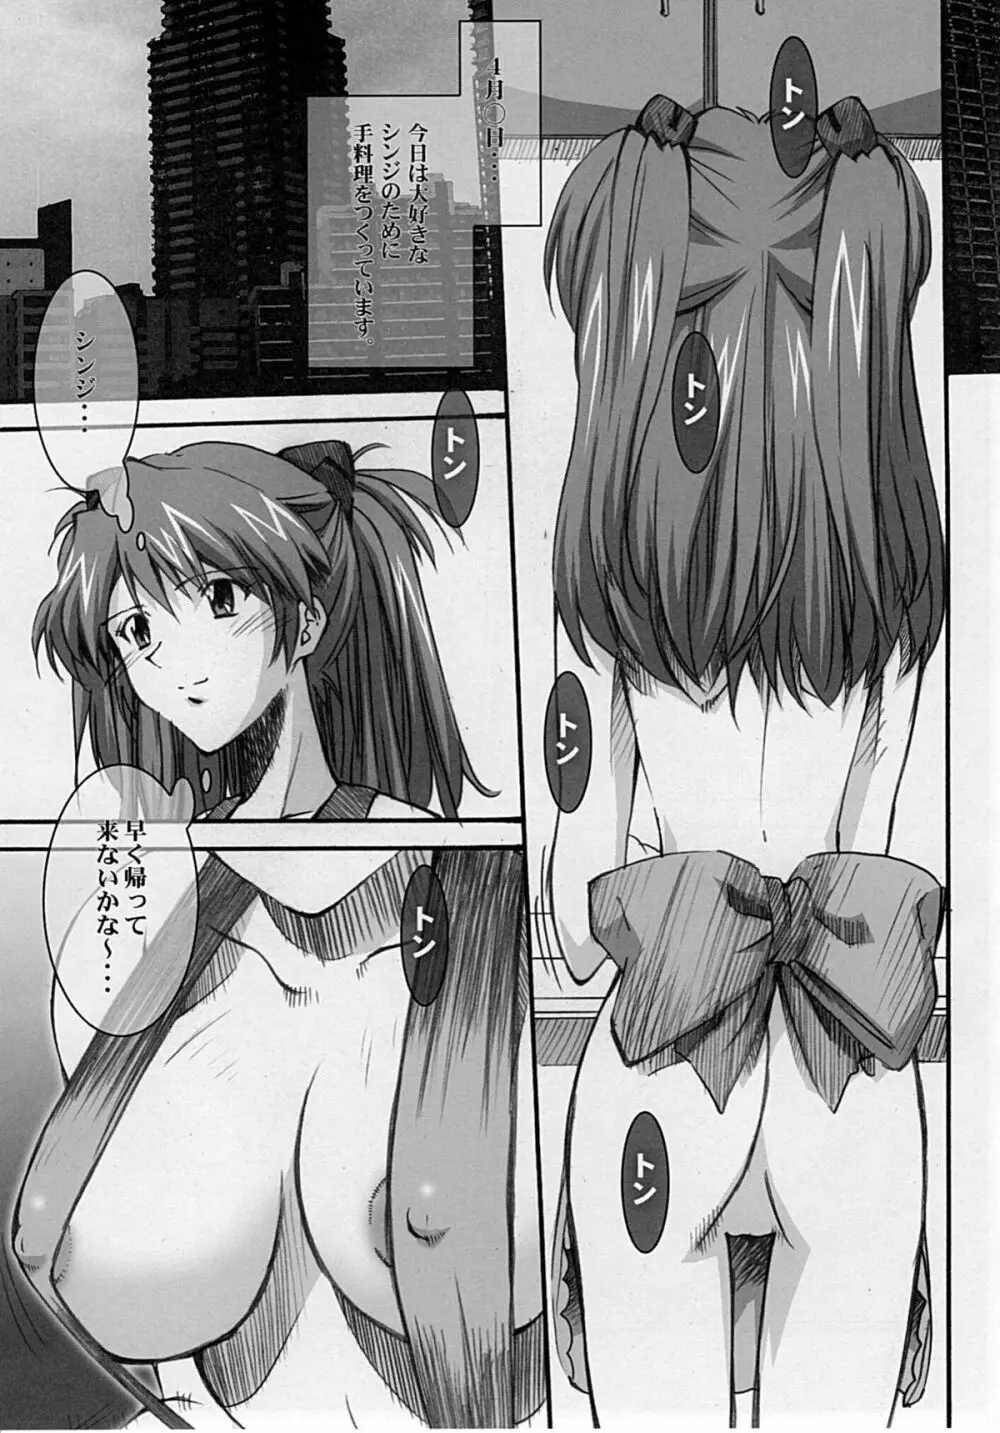 Asuka's Diary 01 Page.4